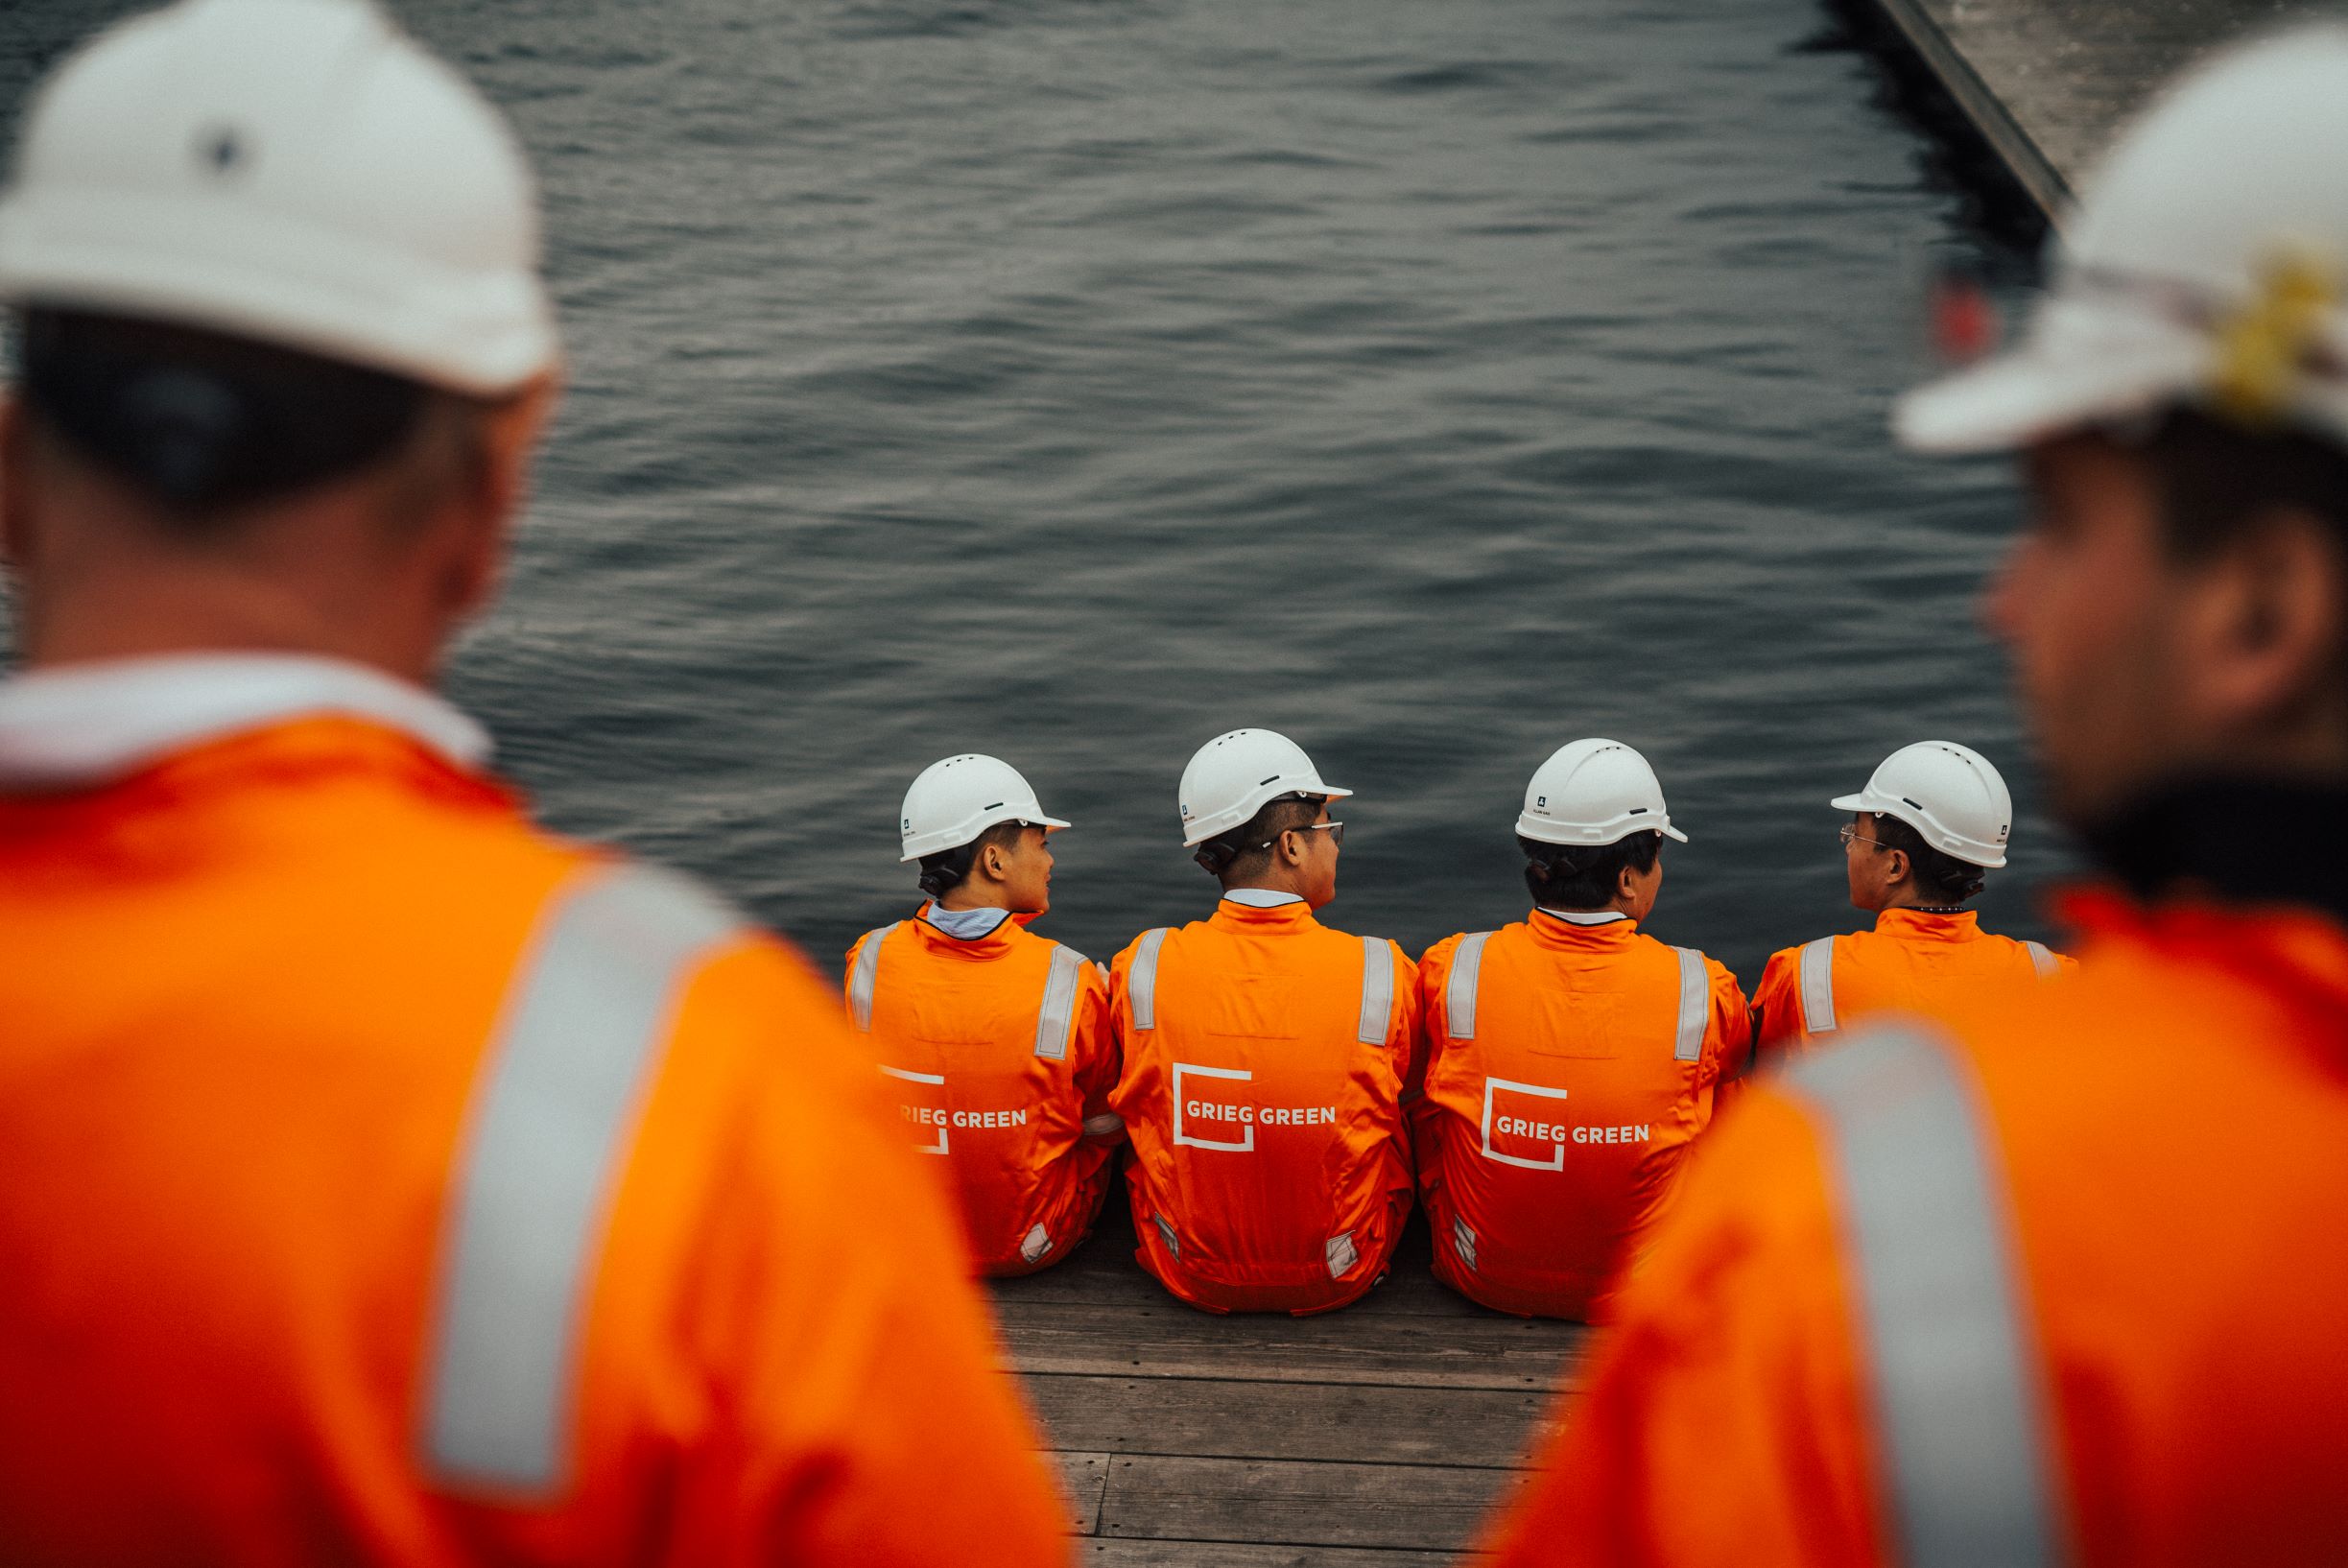 Grieg Green employees in orange uniforms sitting by the ocean.